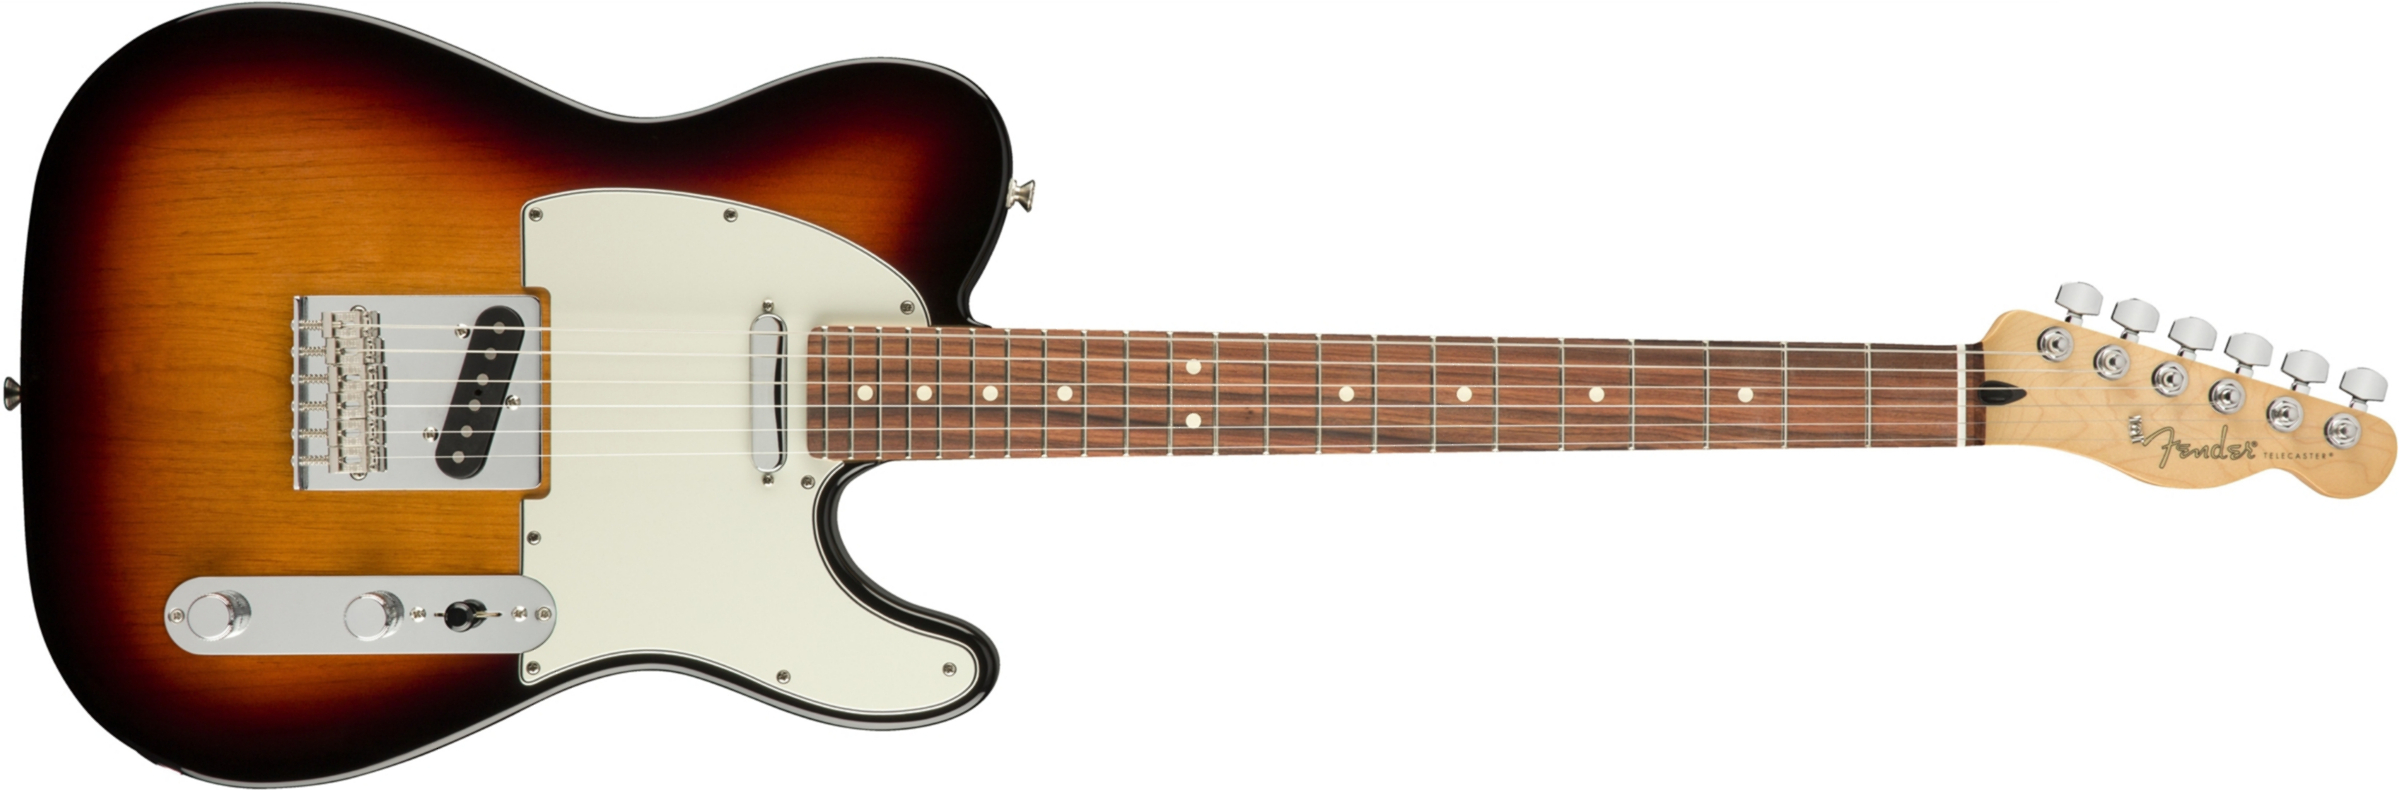 Fender Tele Player Mex Ss Pf - 3-color Sunburst - Televorm elektrische gitaar - Main picture